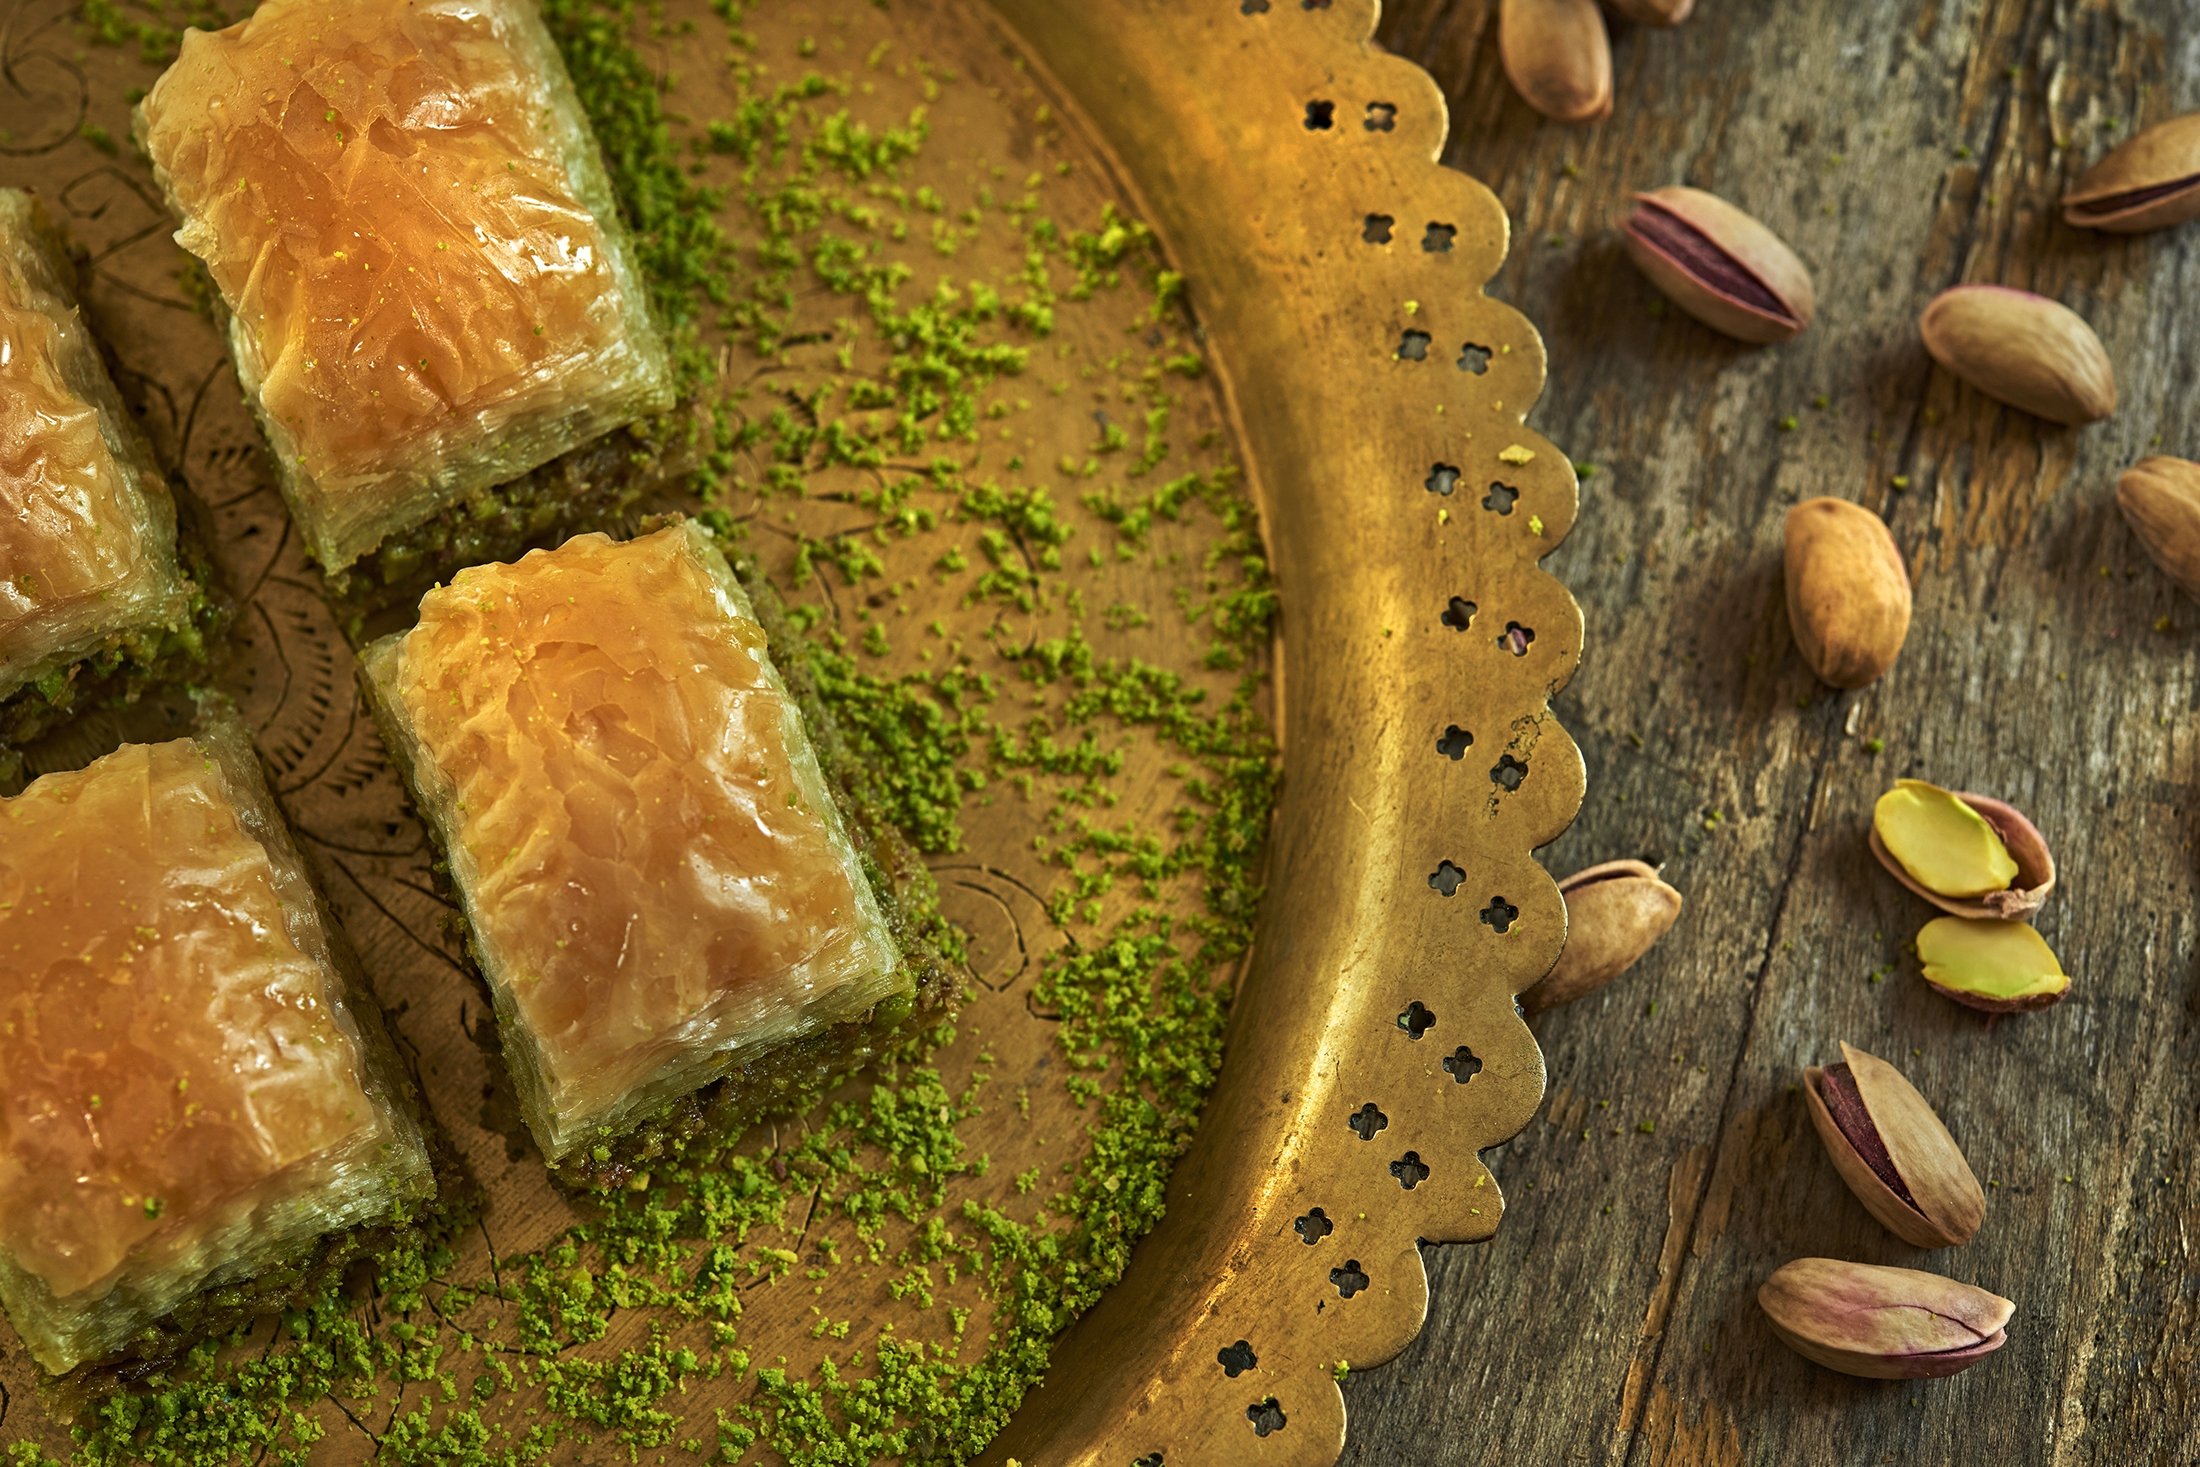 Heavy sherbet desserts such as Turkish baklava should not be preferred in Ramadan. (Archive Photo)